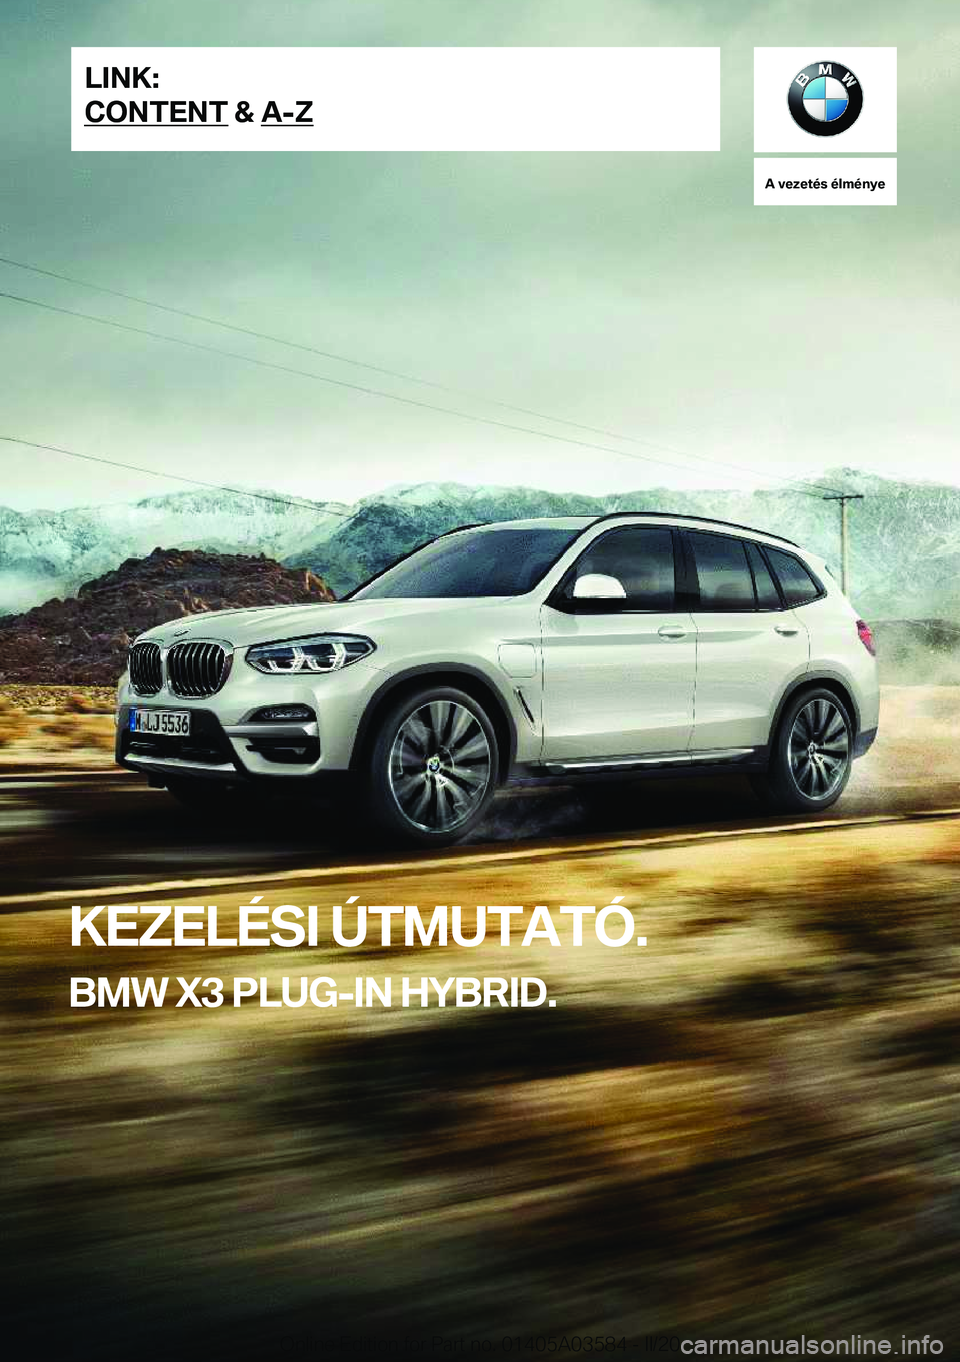 BMW X3 PLUG IN HYBRID 2020  Kezelési útmutató (in Hungarian) �A��v�e�z�e�t�